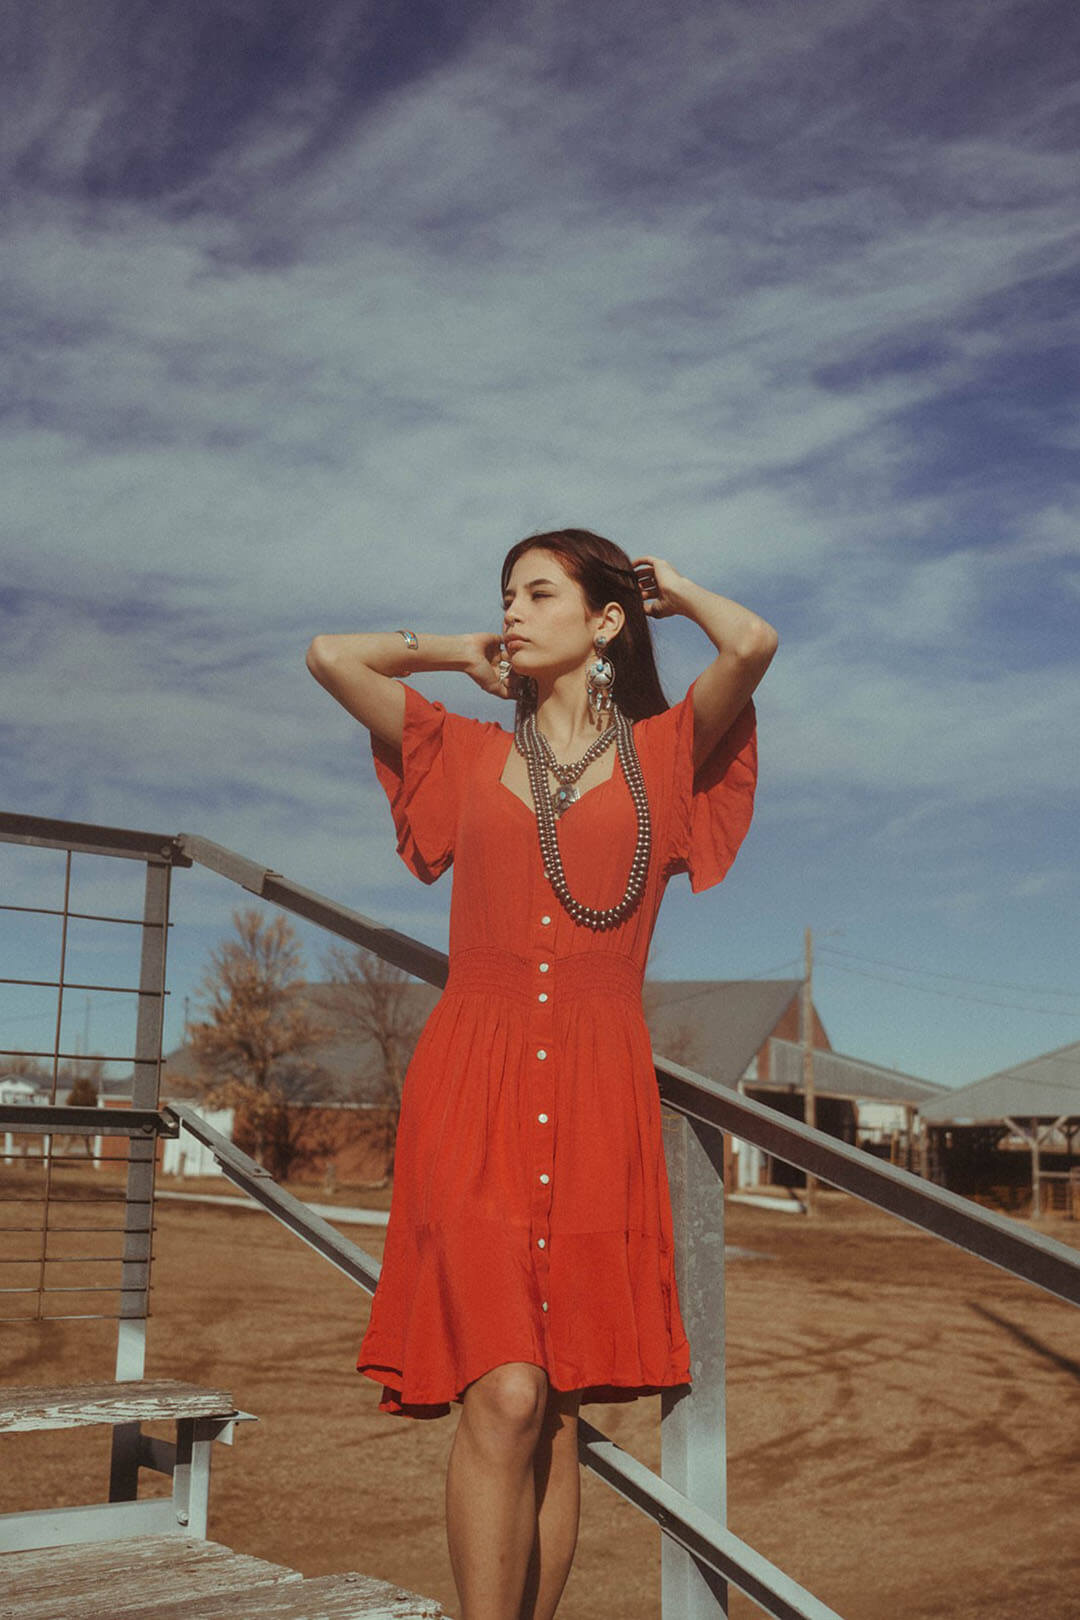 Woman standing on bleachers modeling the Wrangler Retro Red Dress.  The dress has ruffle short sleeves.  